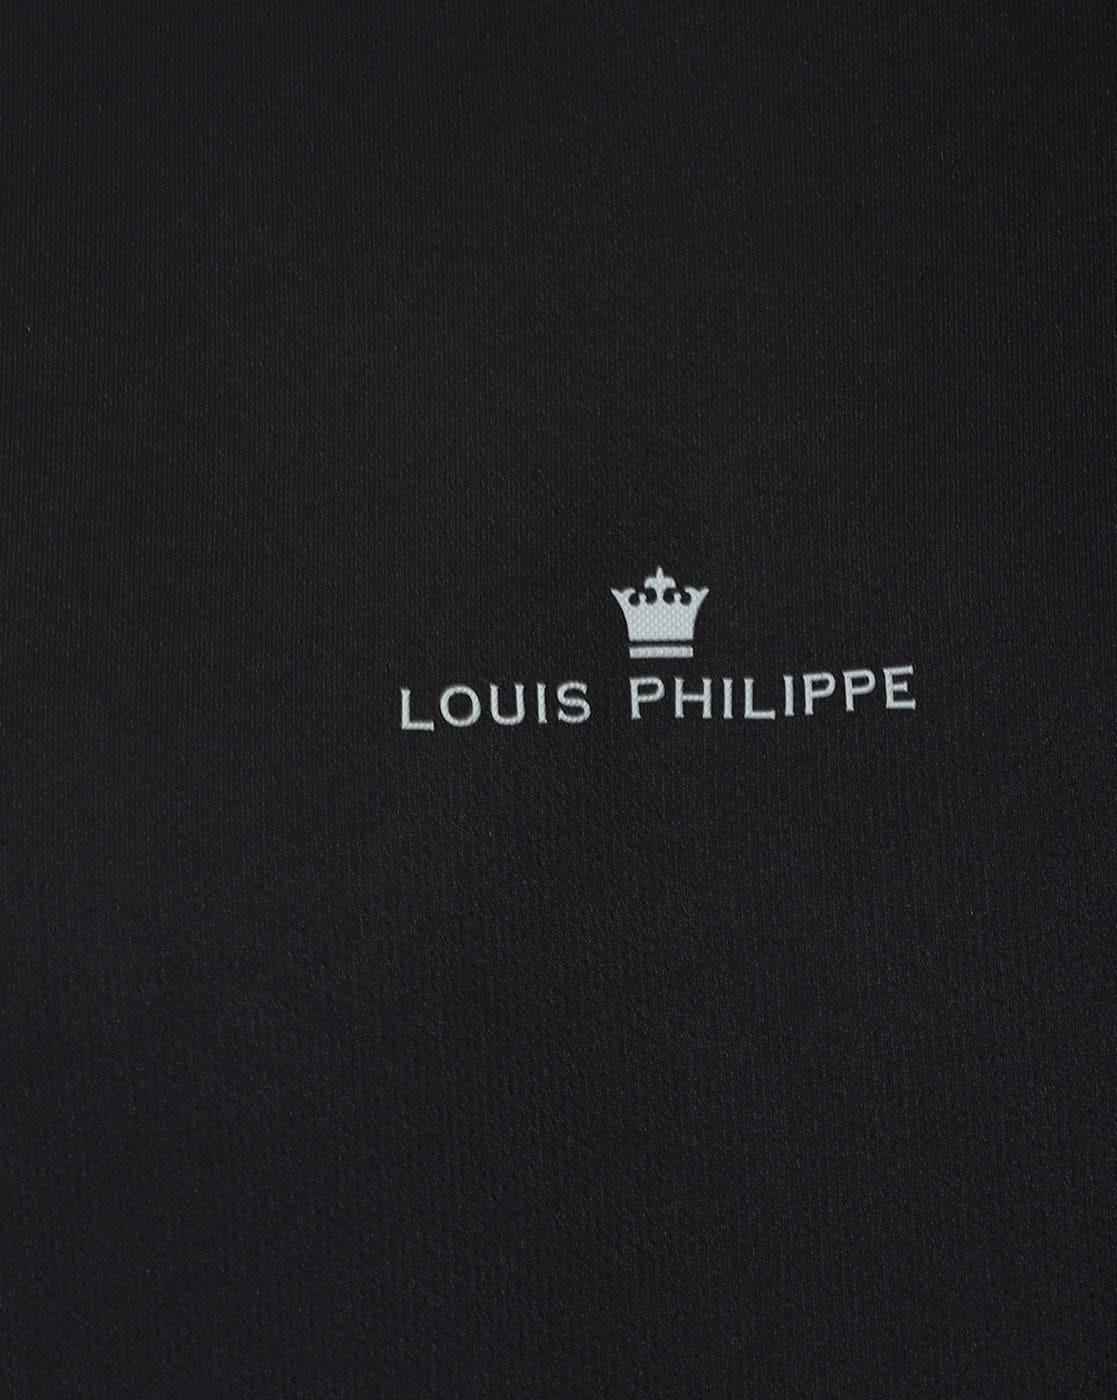 Louis philippe 